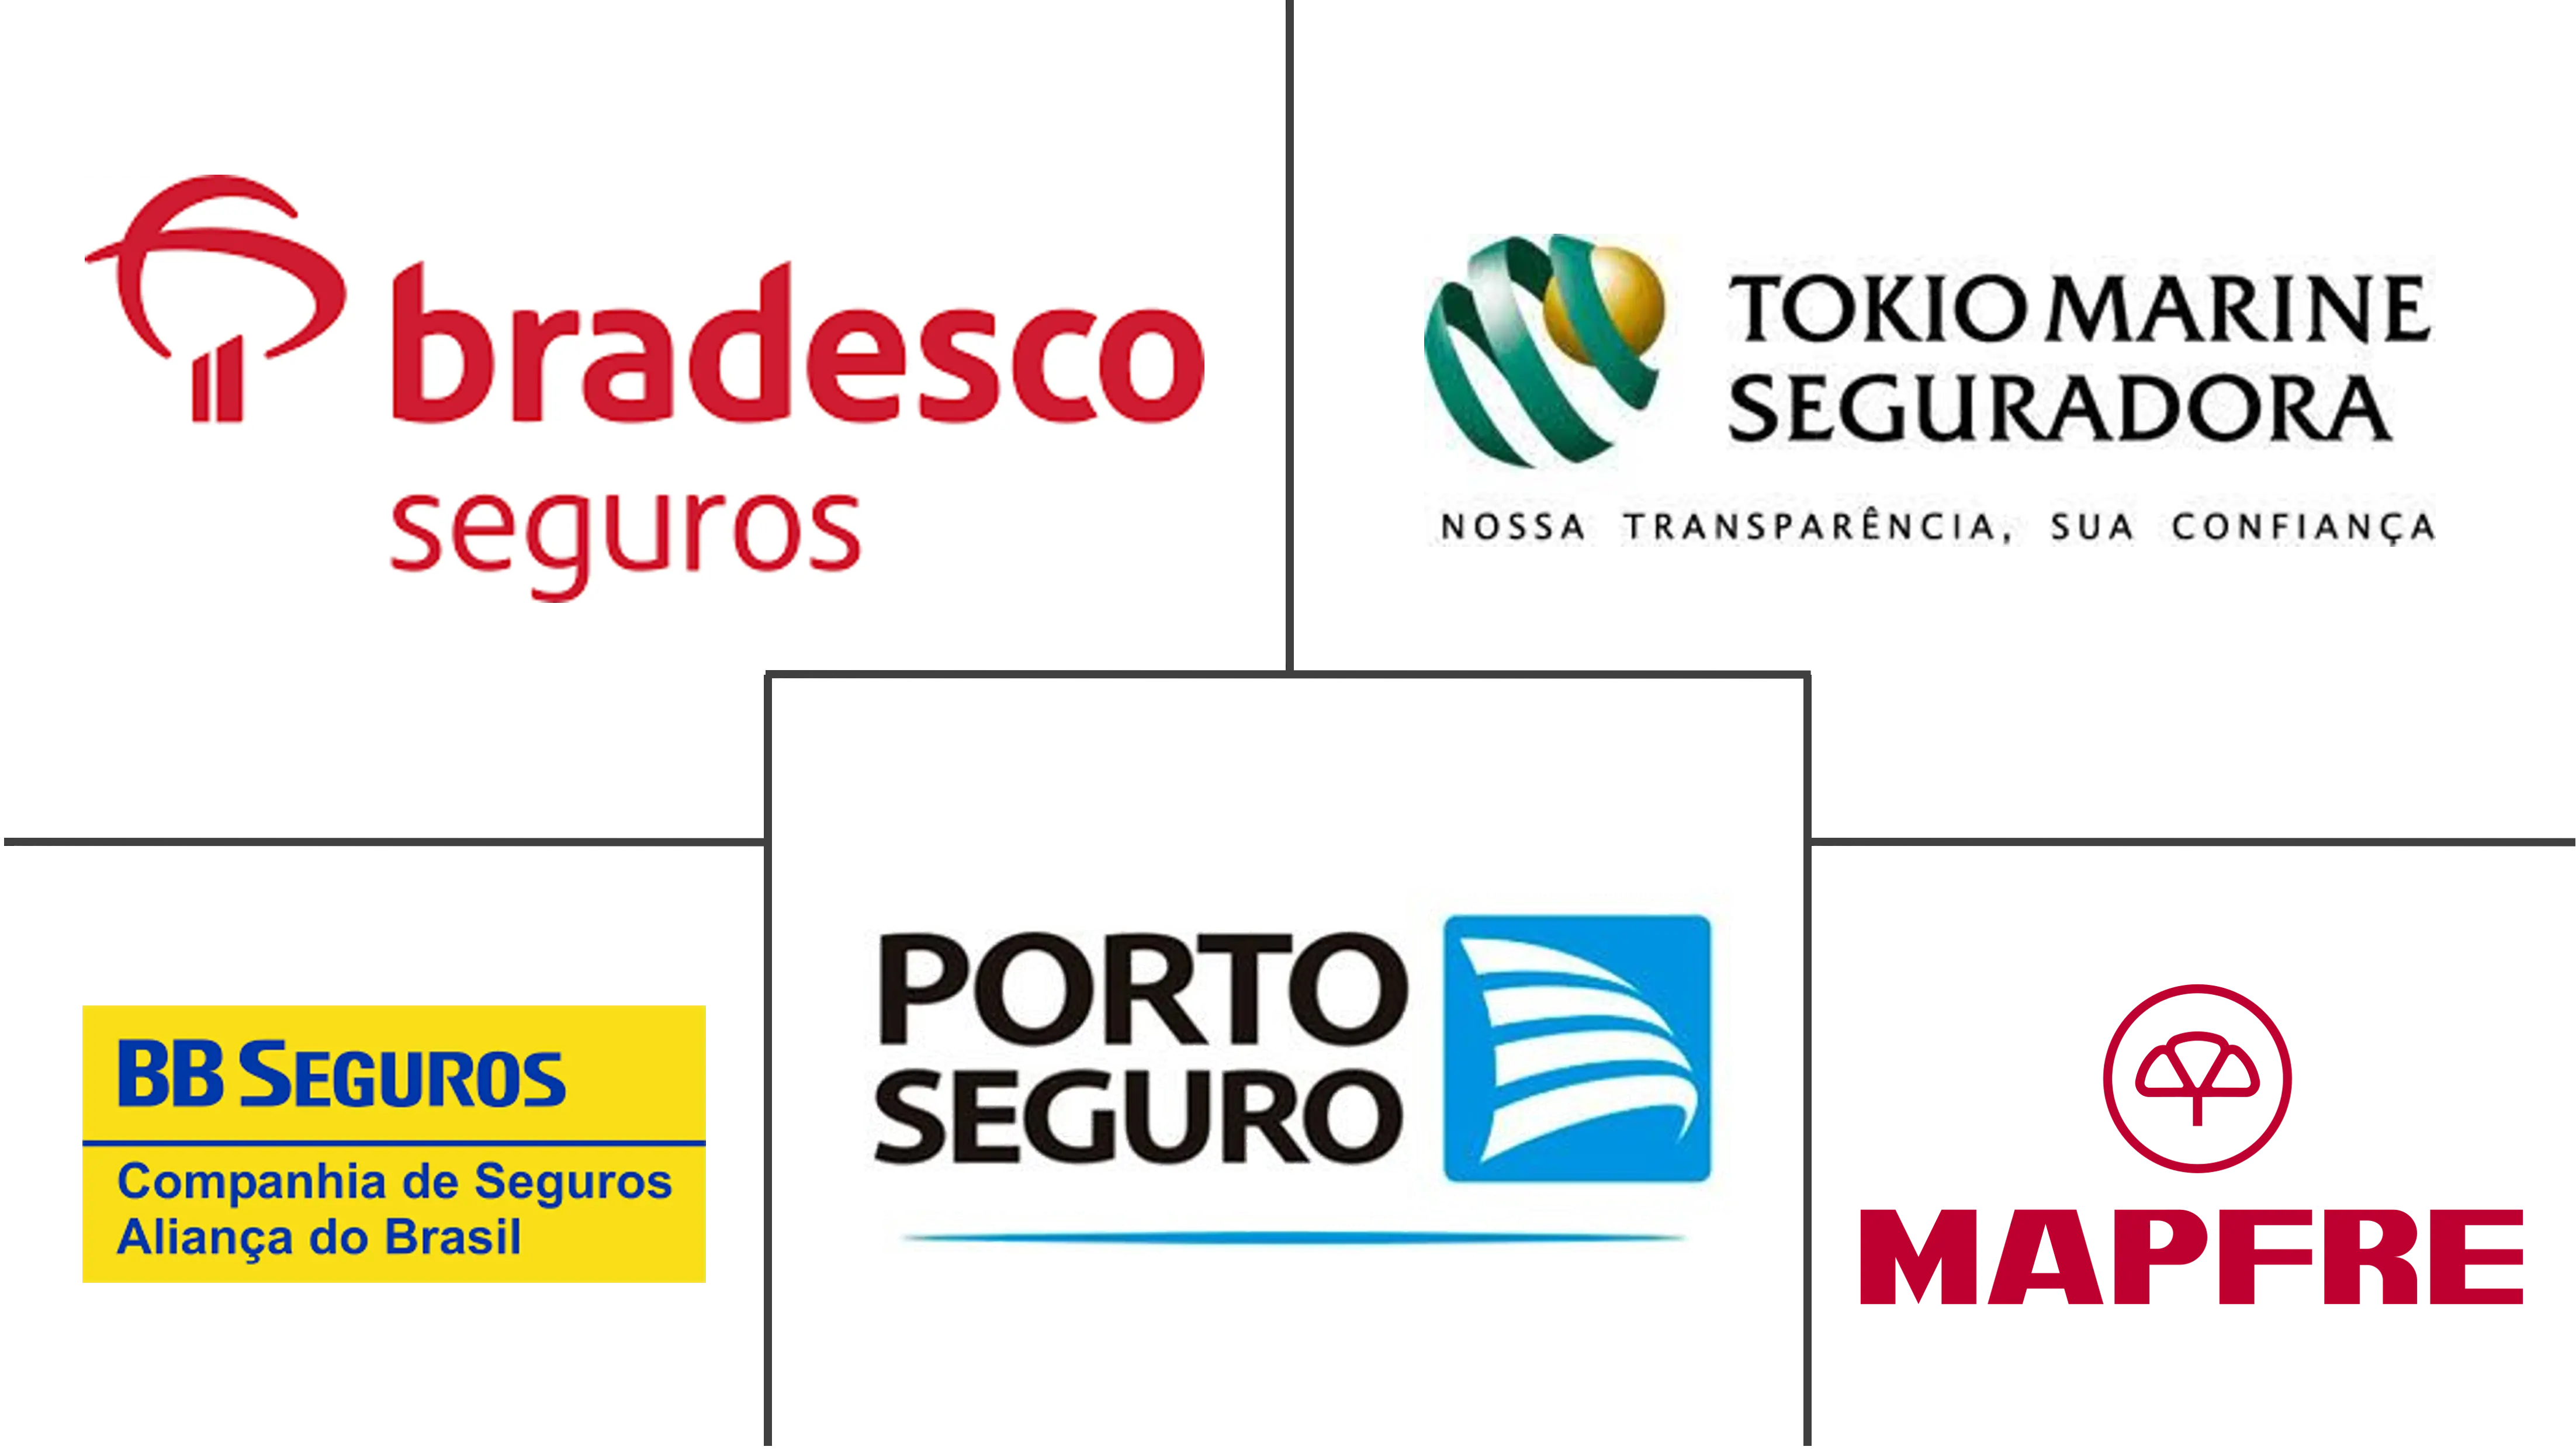  Brazil Life and Non-Life Insurance Market  Major Players